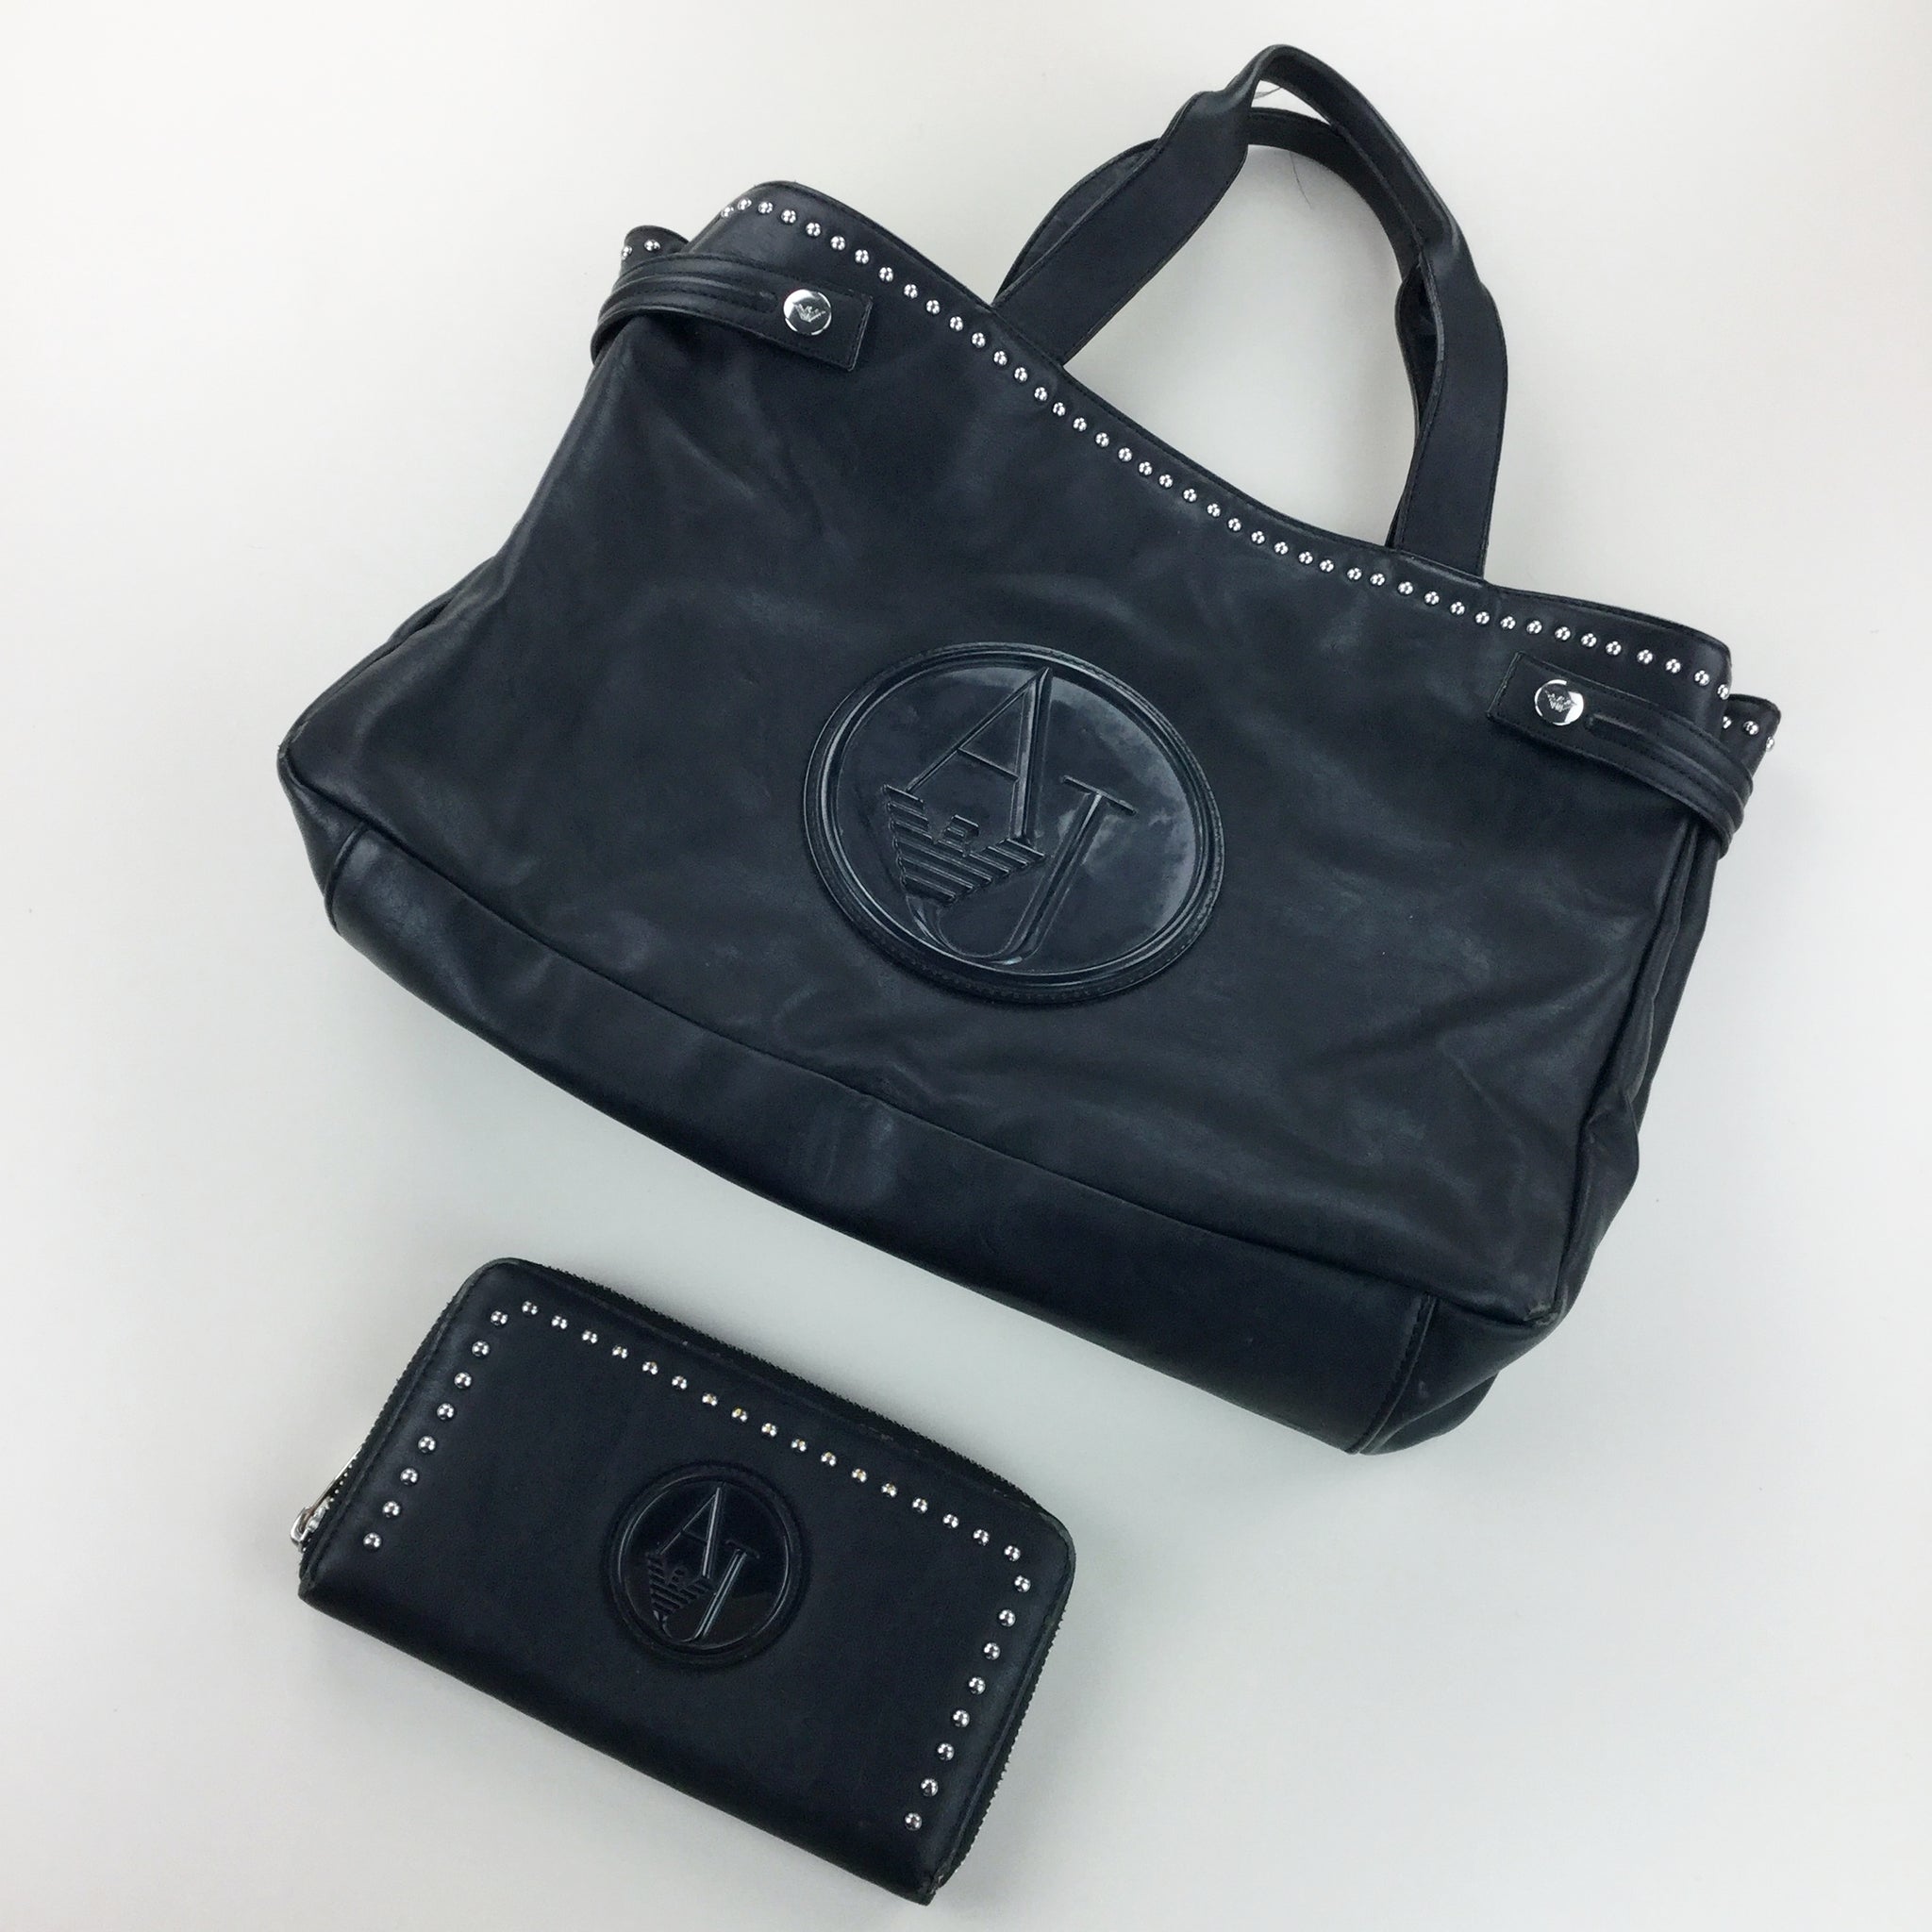 Black Armani Jeans Bag | eBay